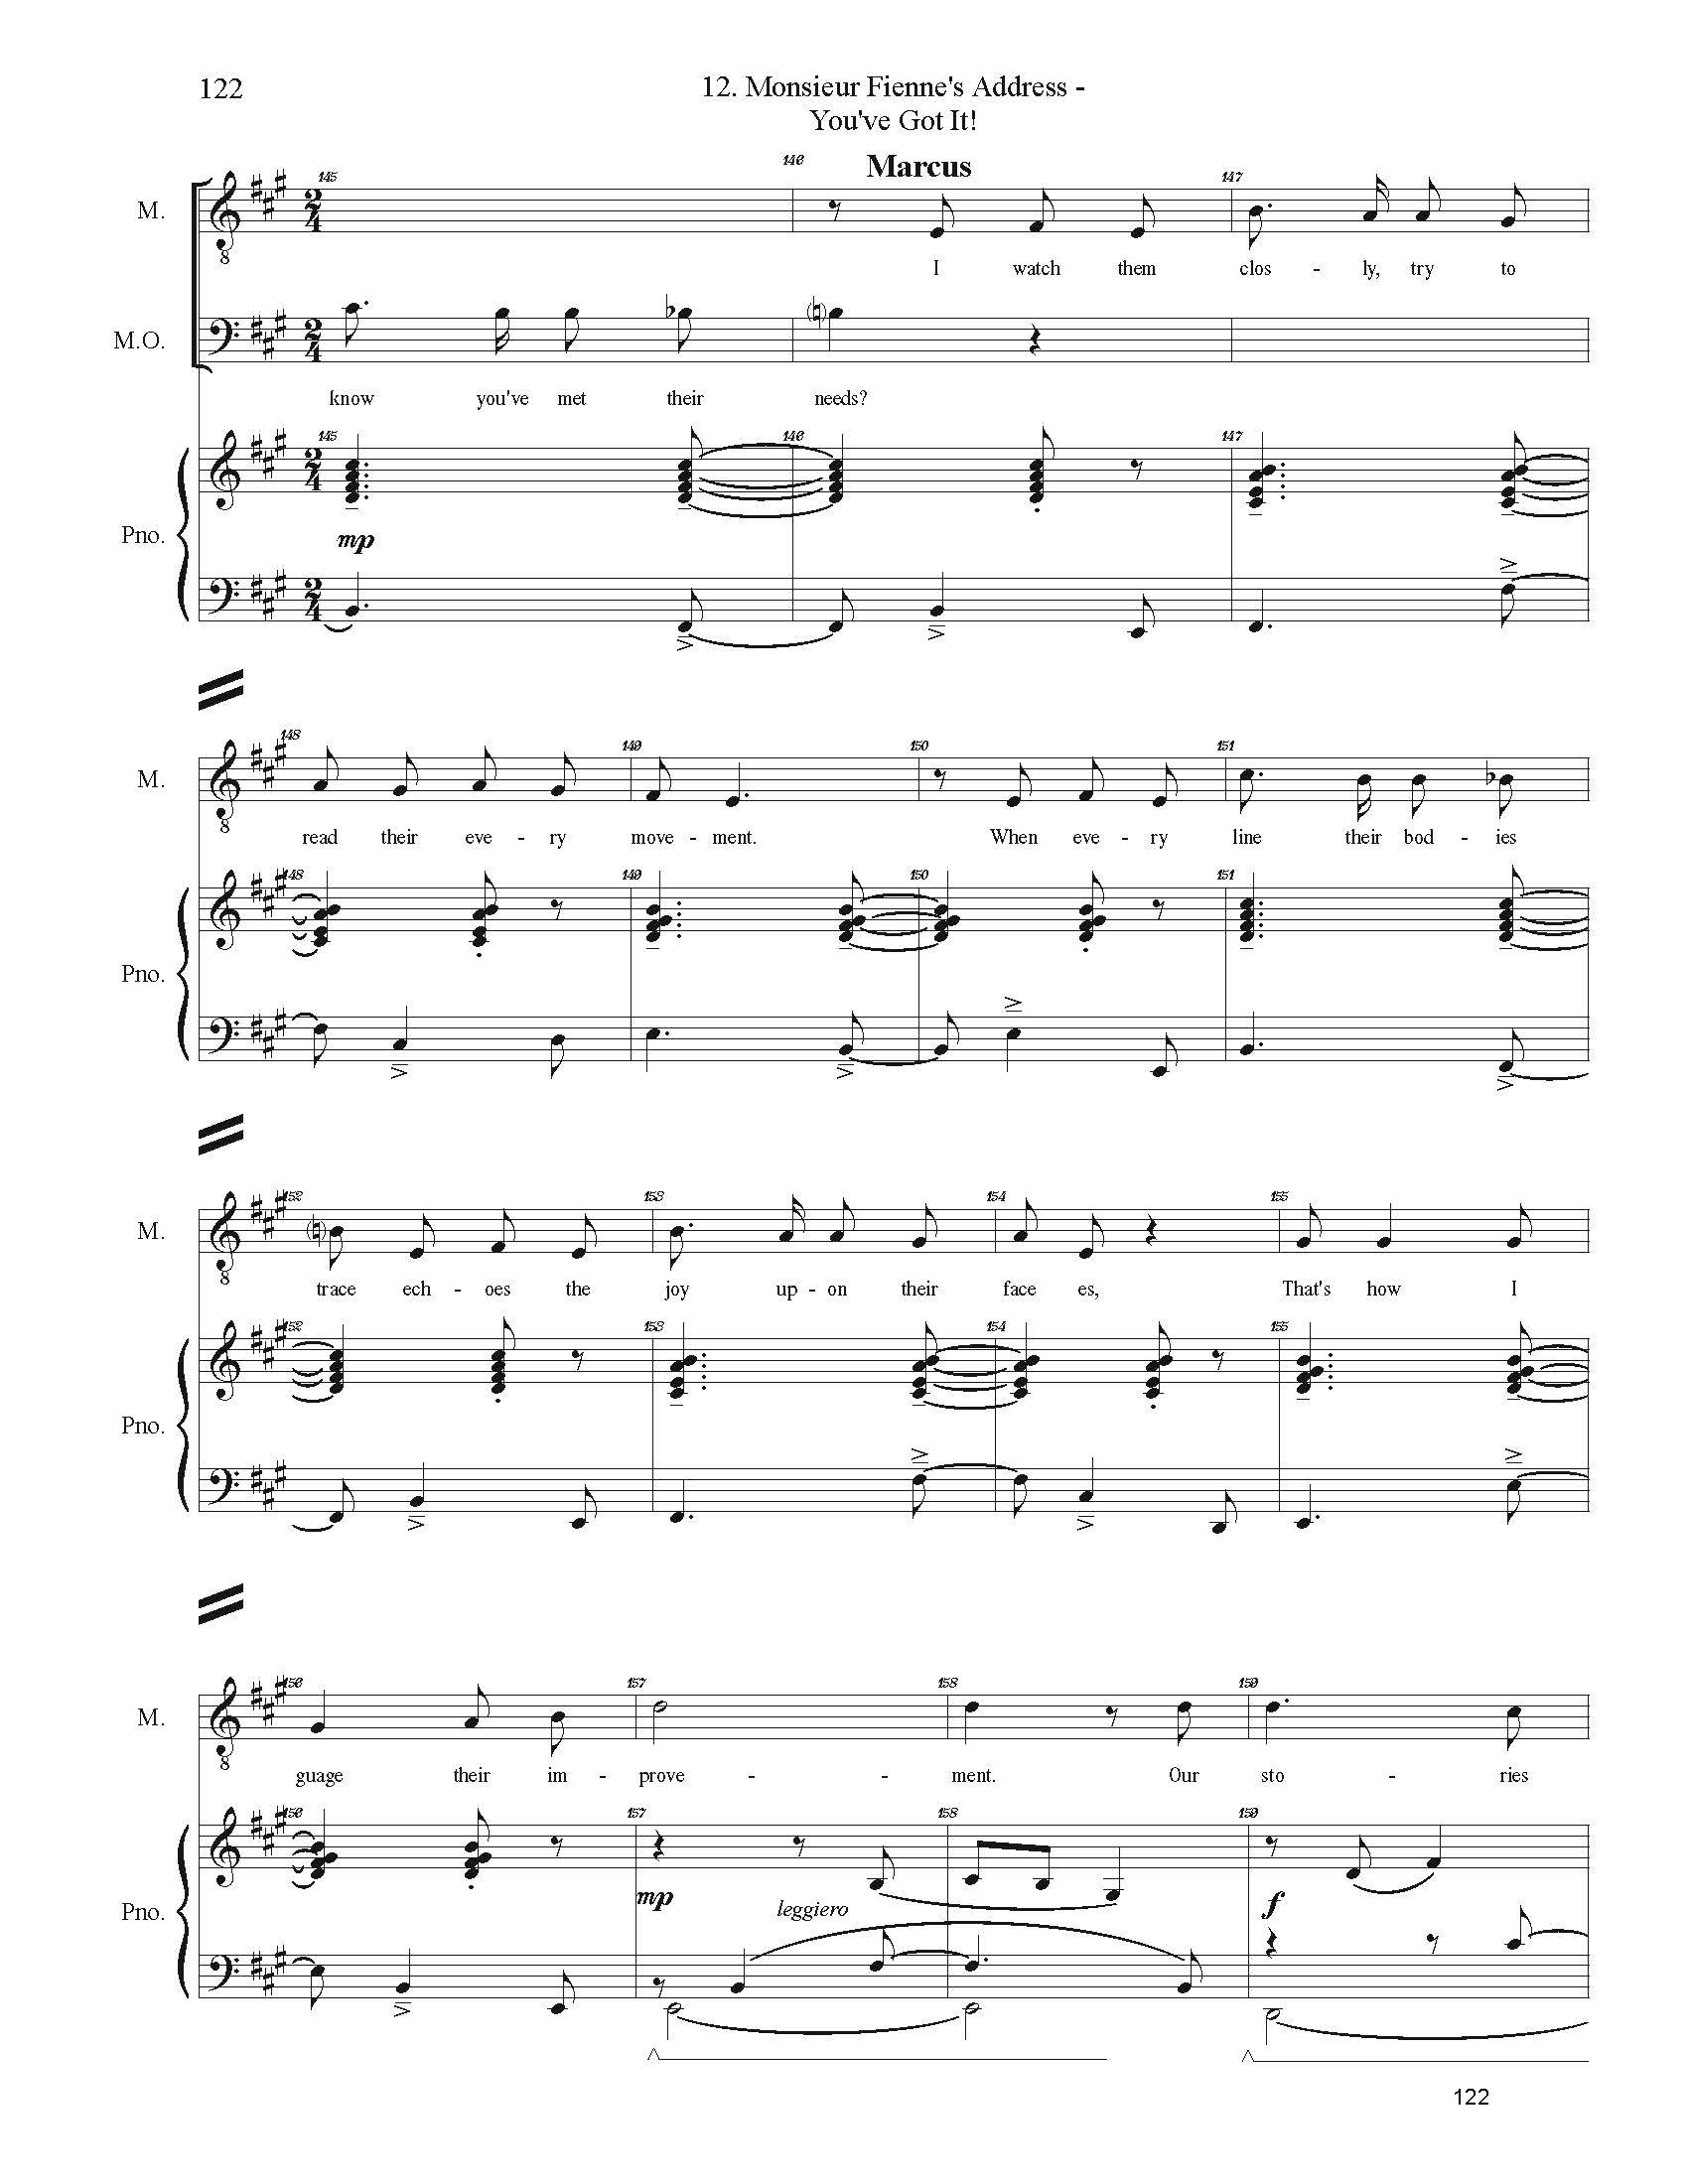 FULL PIANO VOCAL SCORE DRAFT 1 - Score_Page_122.jpg